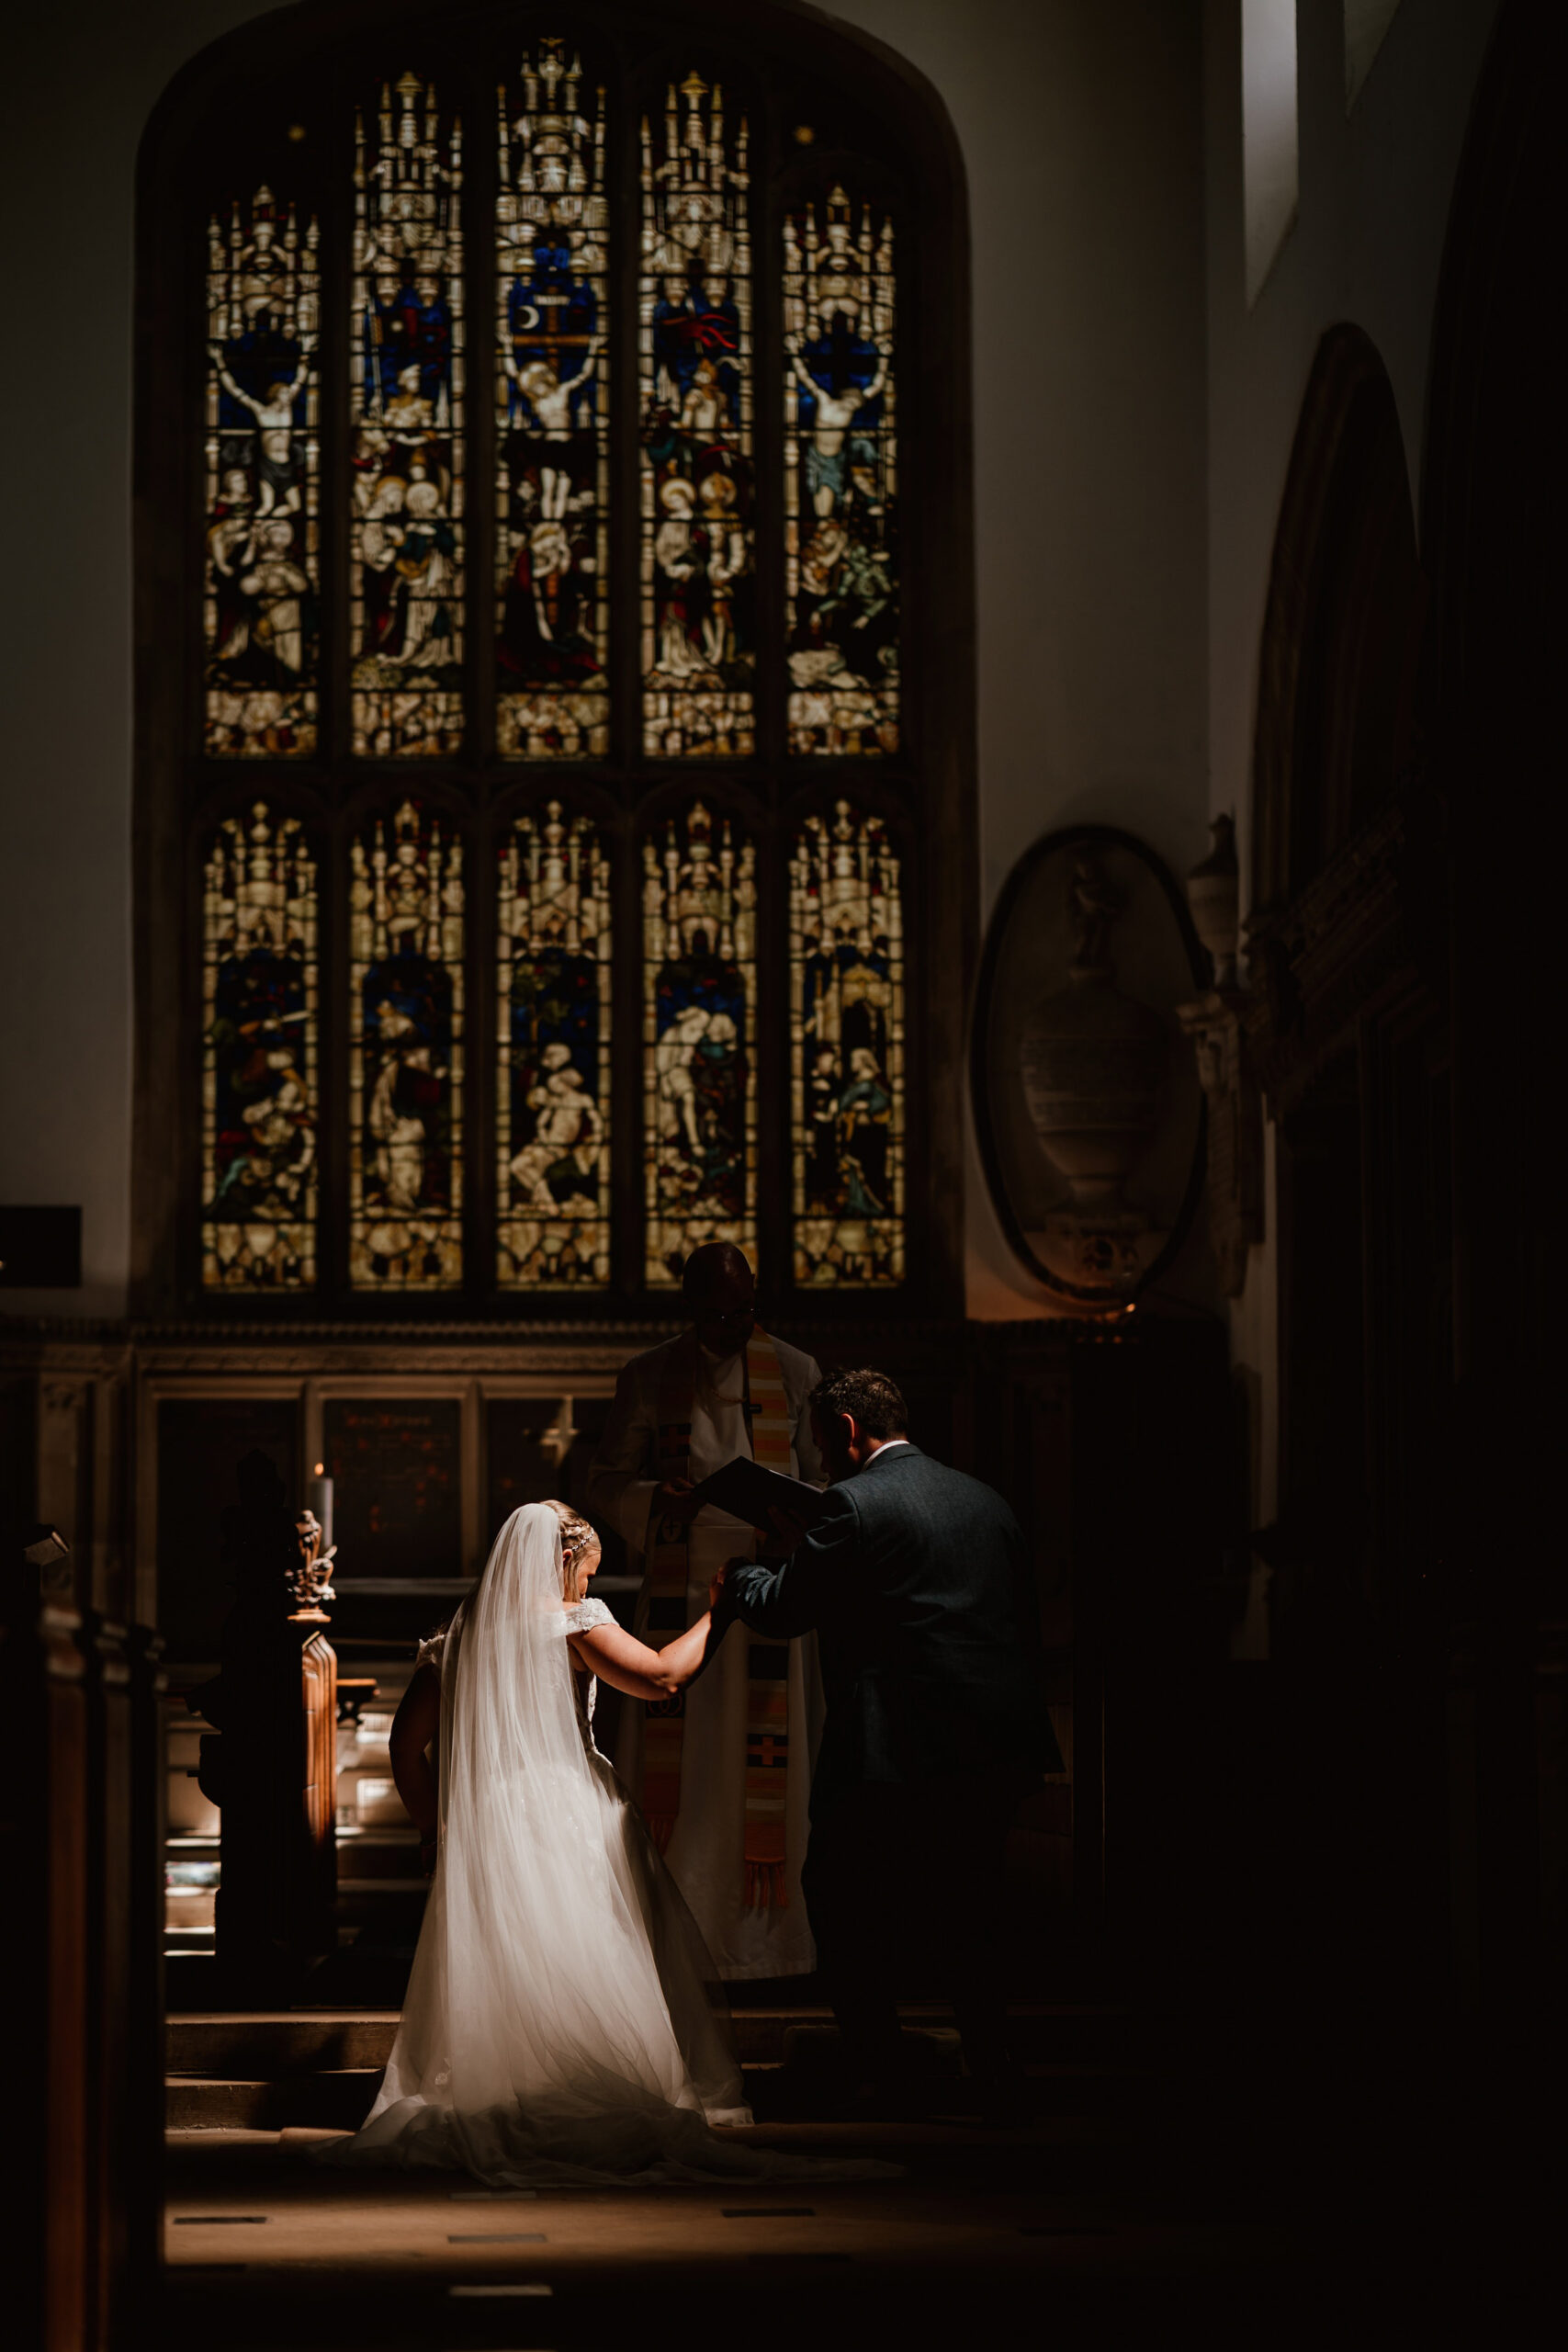 LIght on bride in church - fine art wedding photojournalism